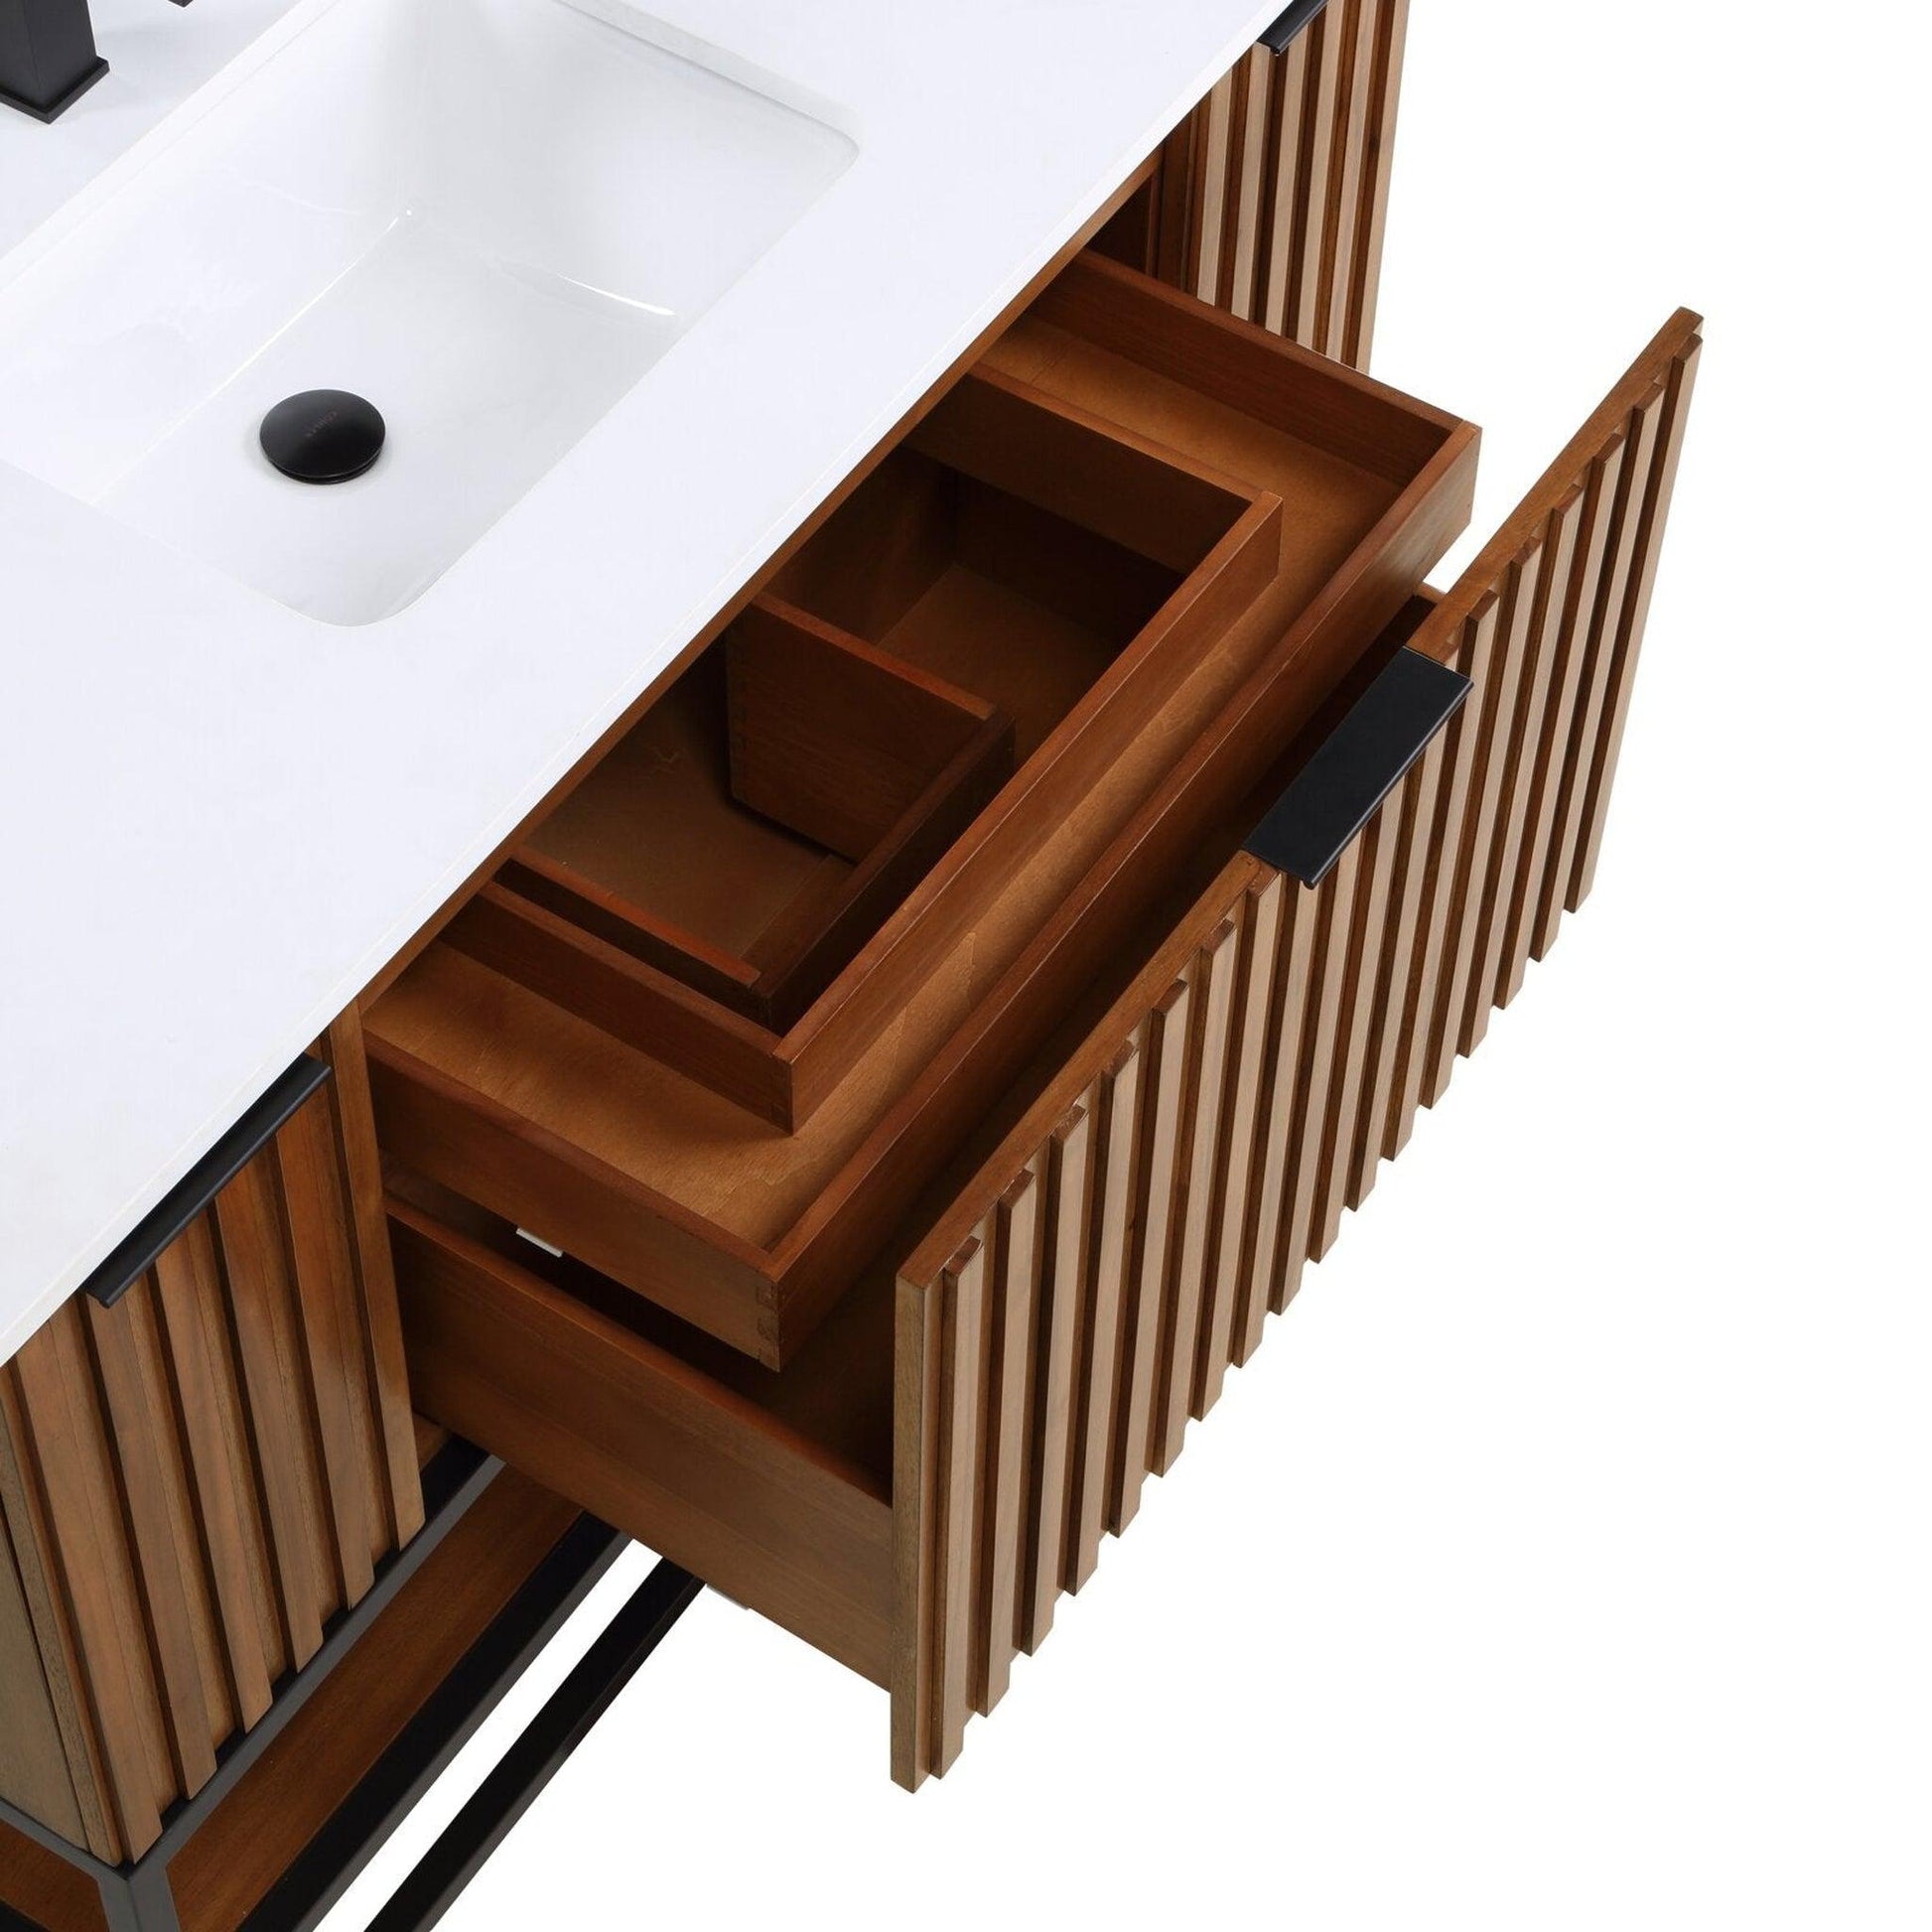 Wide Plank Teak Countertop with Undermount Sink